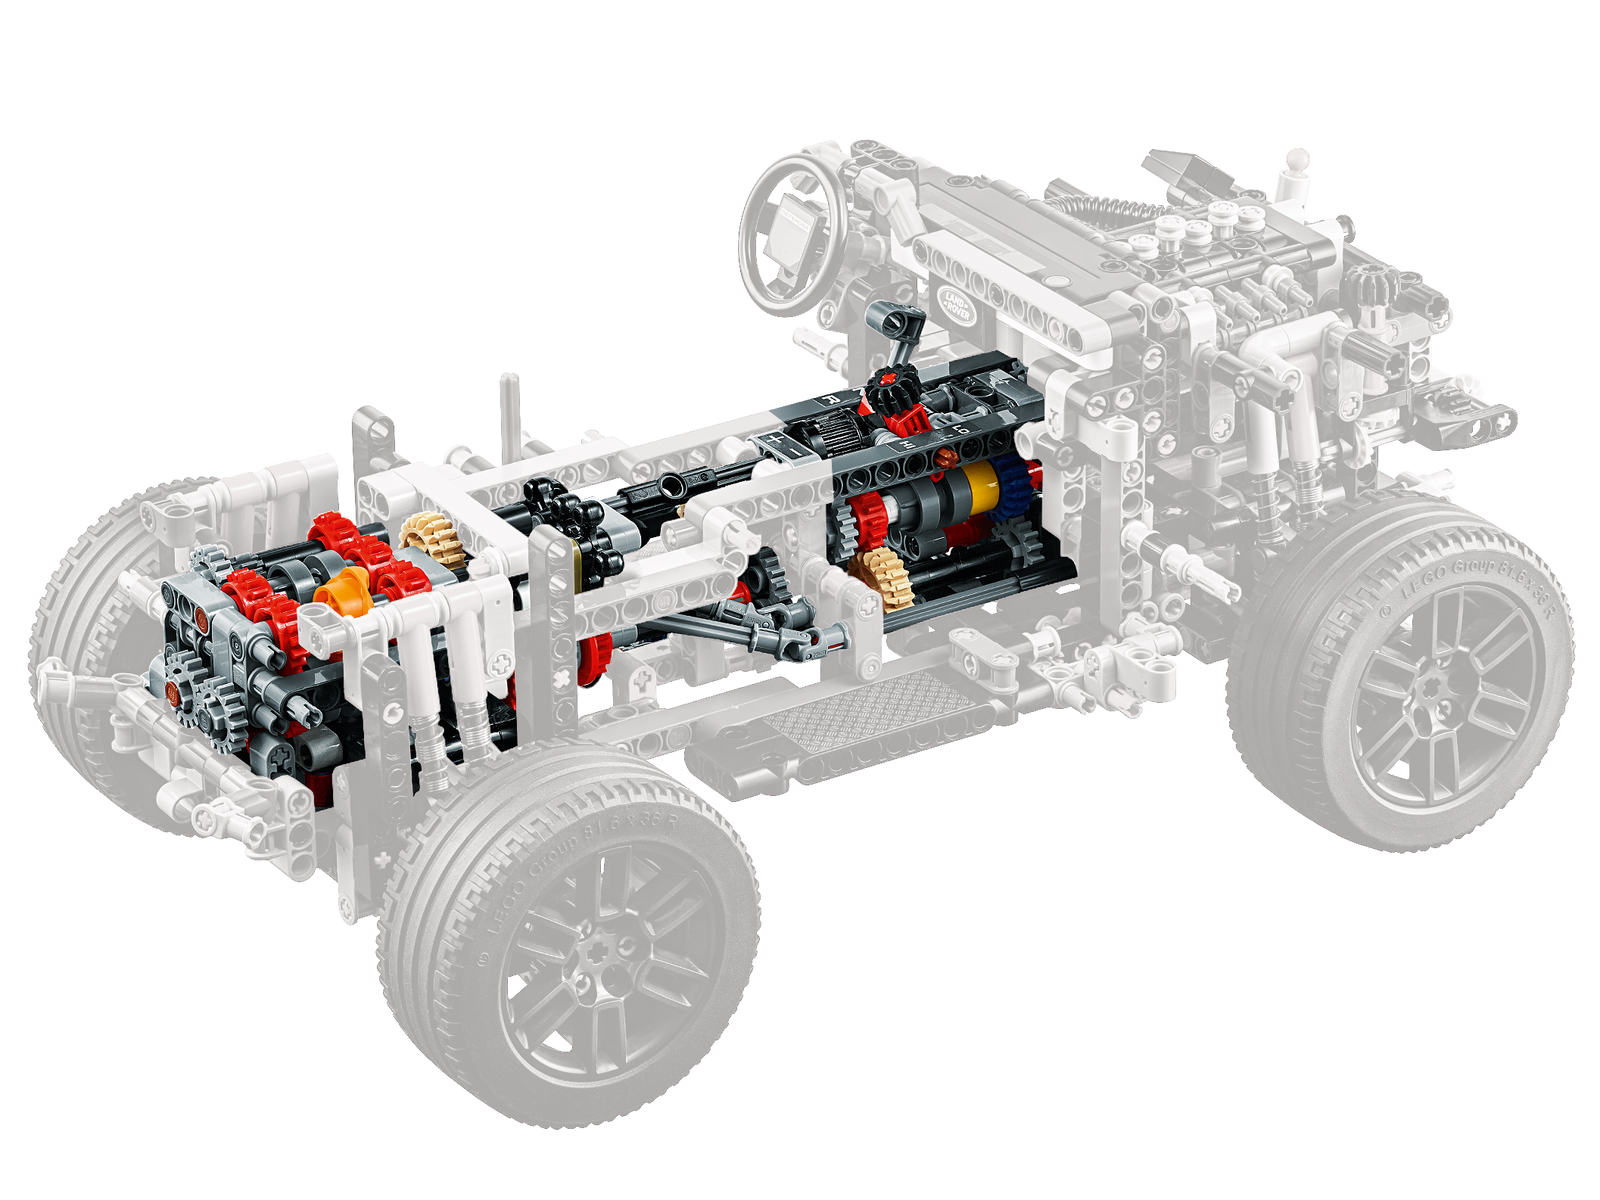 LEGO Technic Land Rover Defender 42110